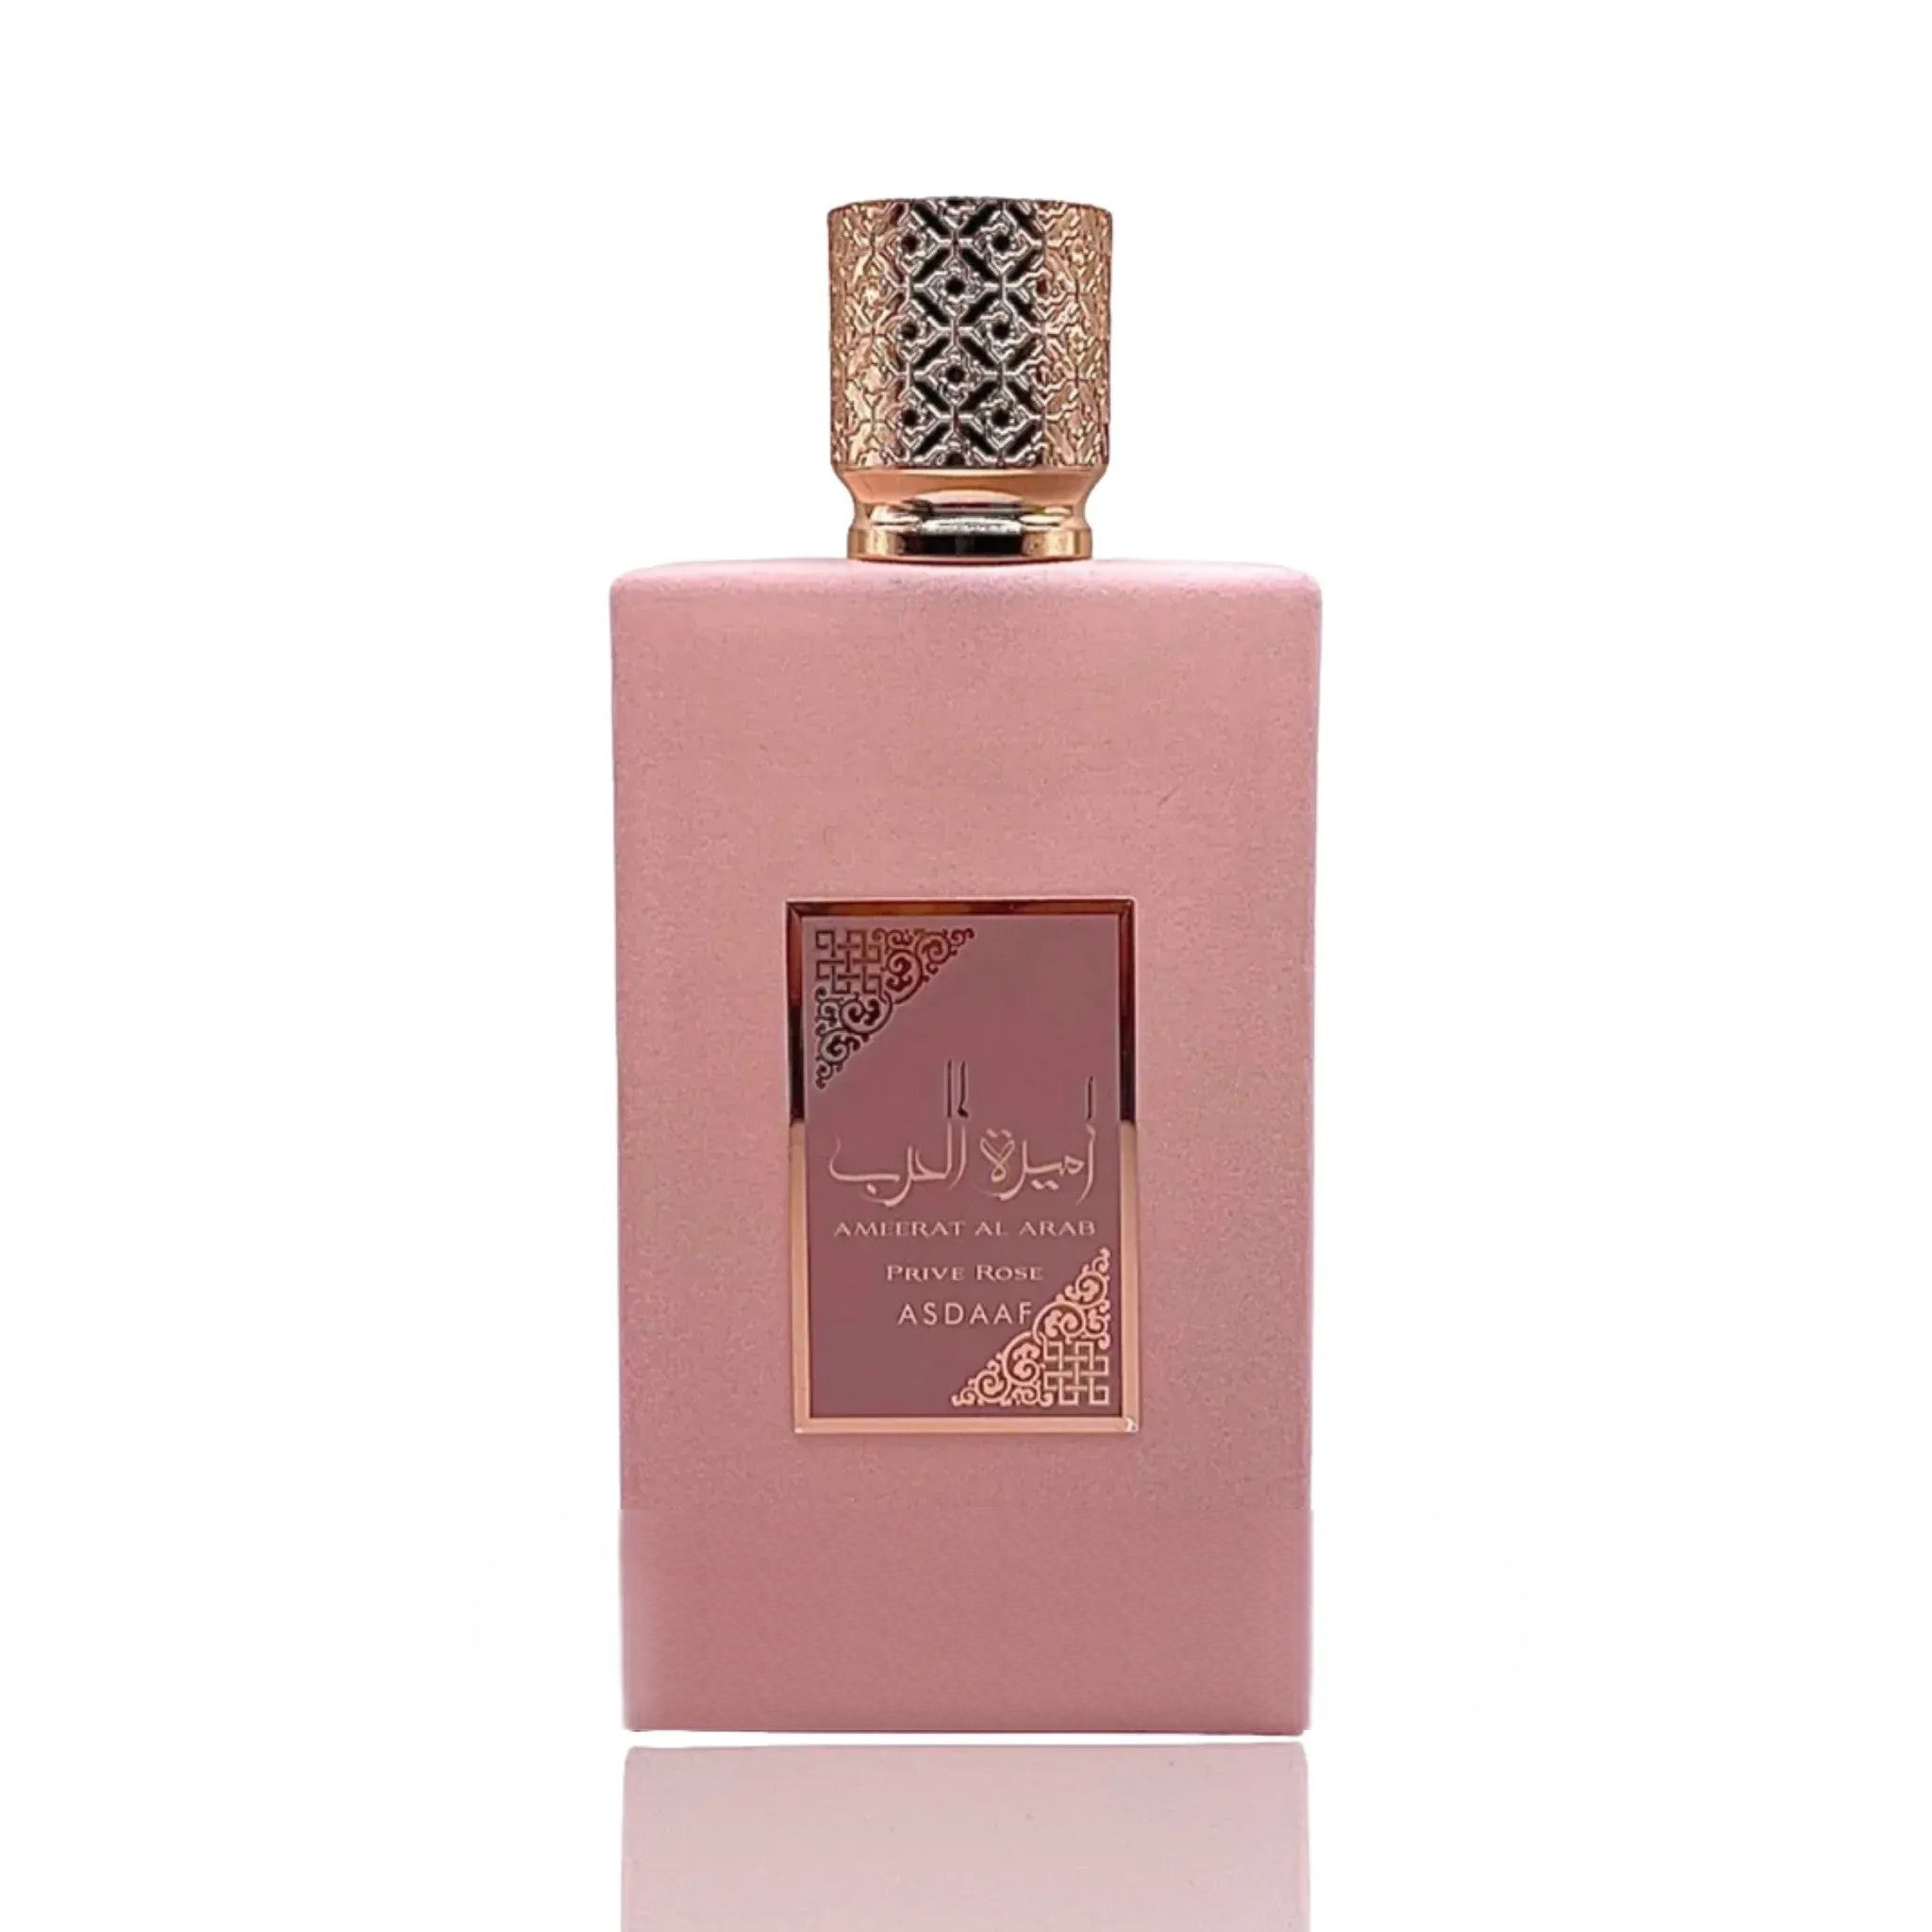 Ameerat Al Arab Prive Rose | Eau De Perfume 100ml | by Asdaaf